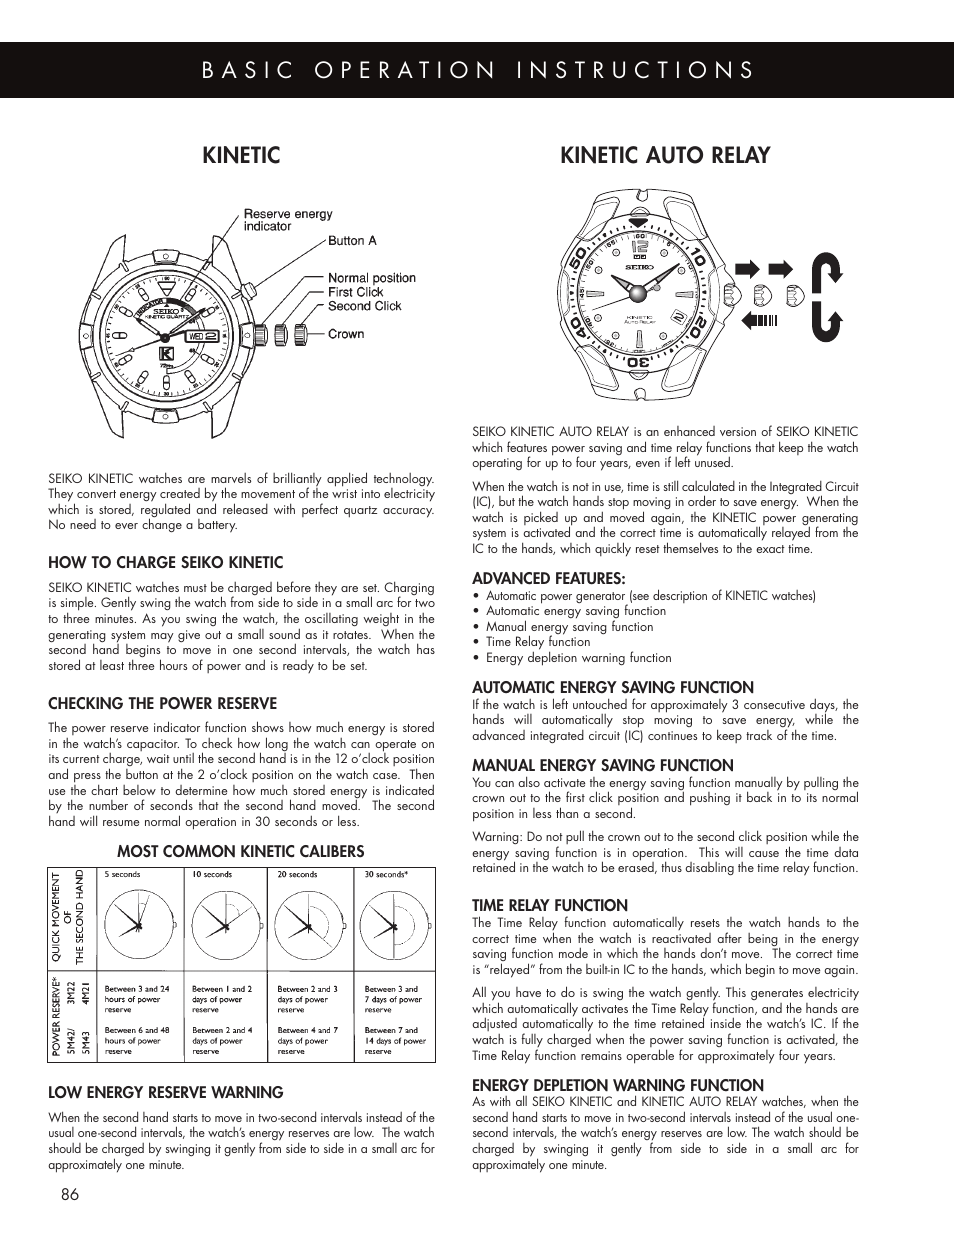 Kinetic auto relay | Seiko BASIC User Manual | Page 3 / 4